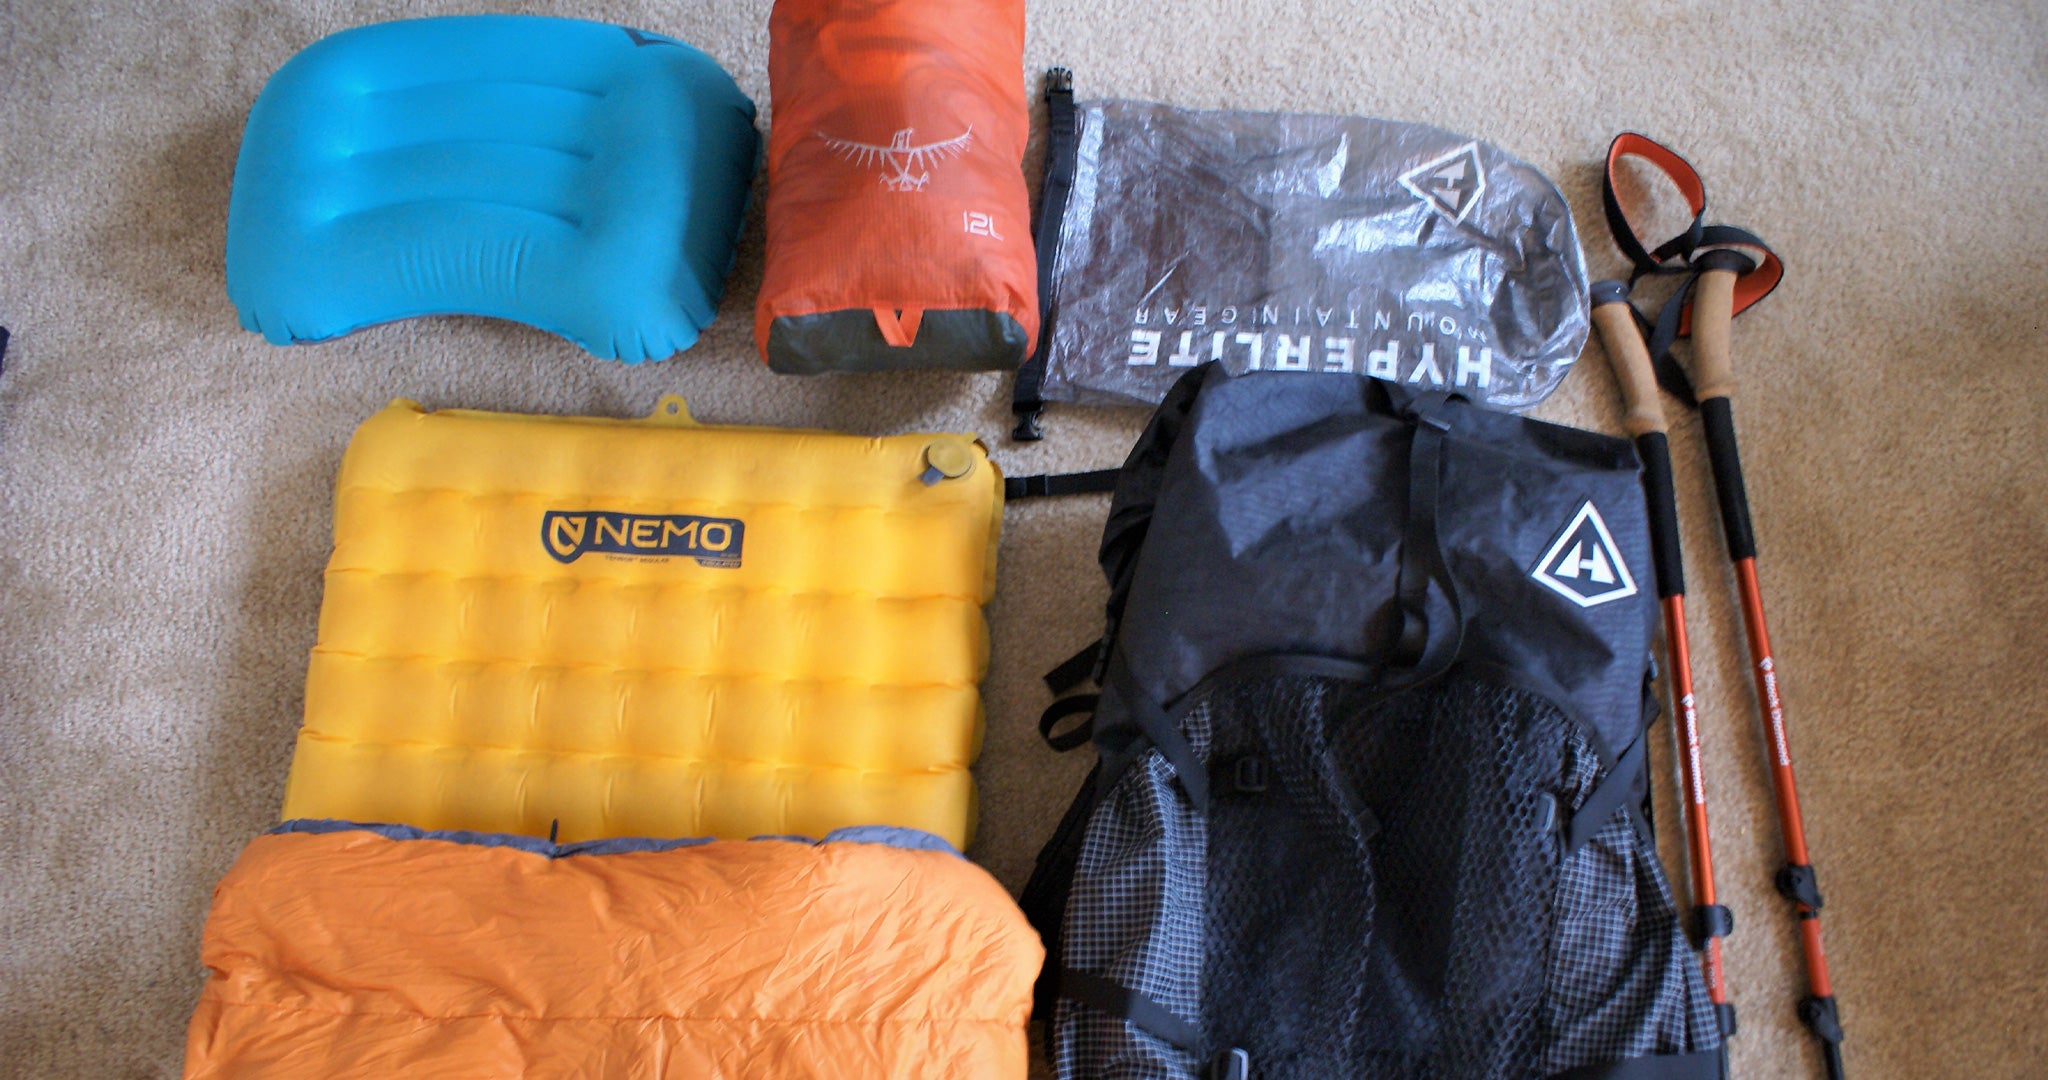 Ultralight sleeping gear and pack